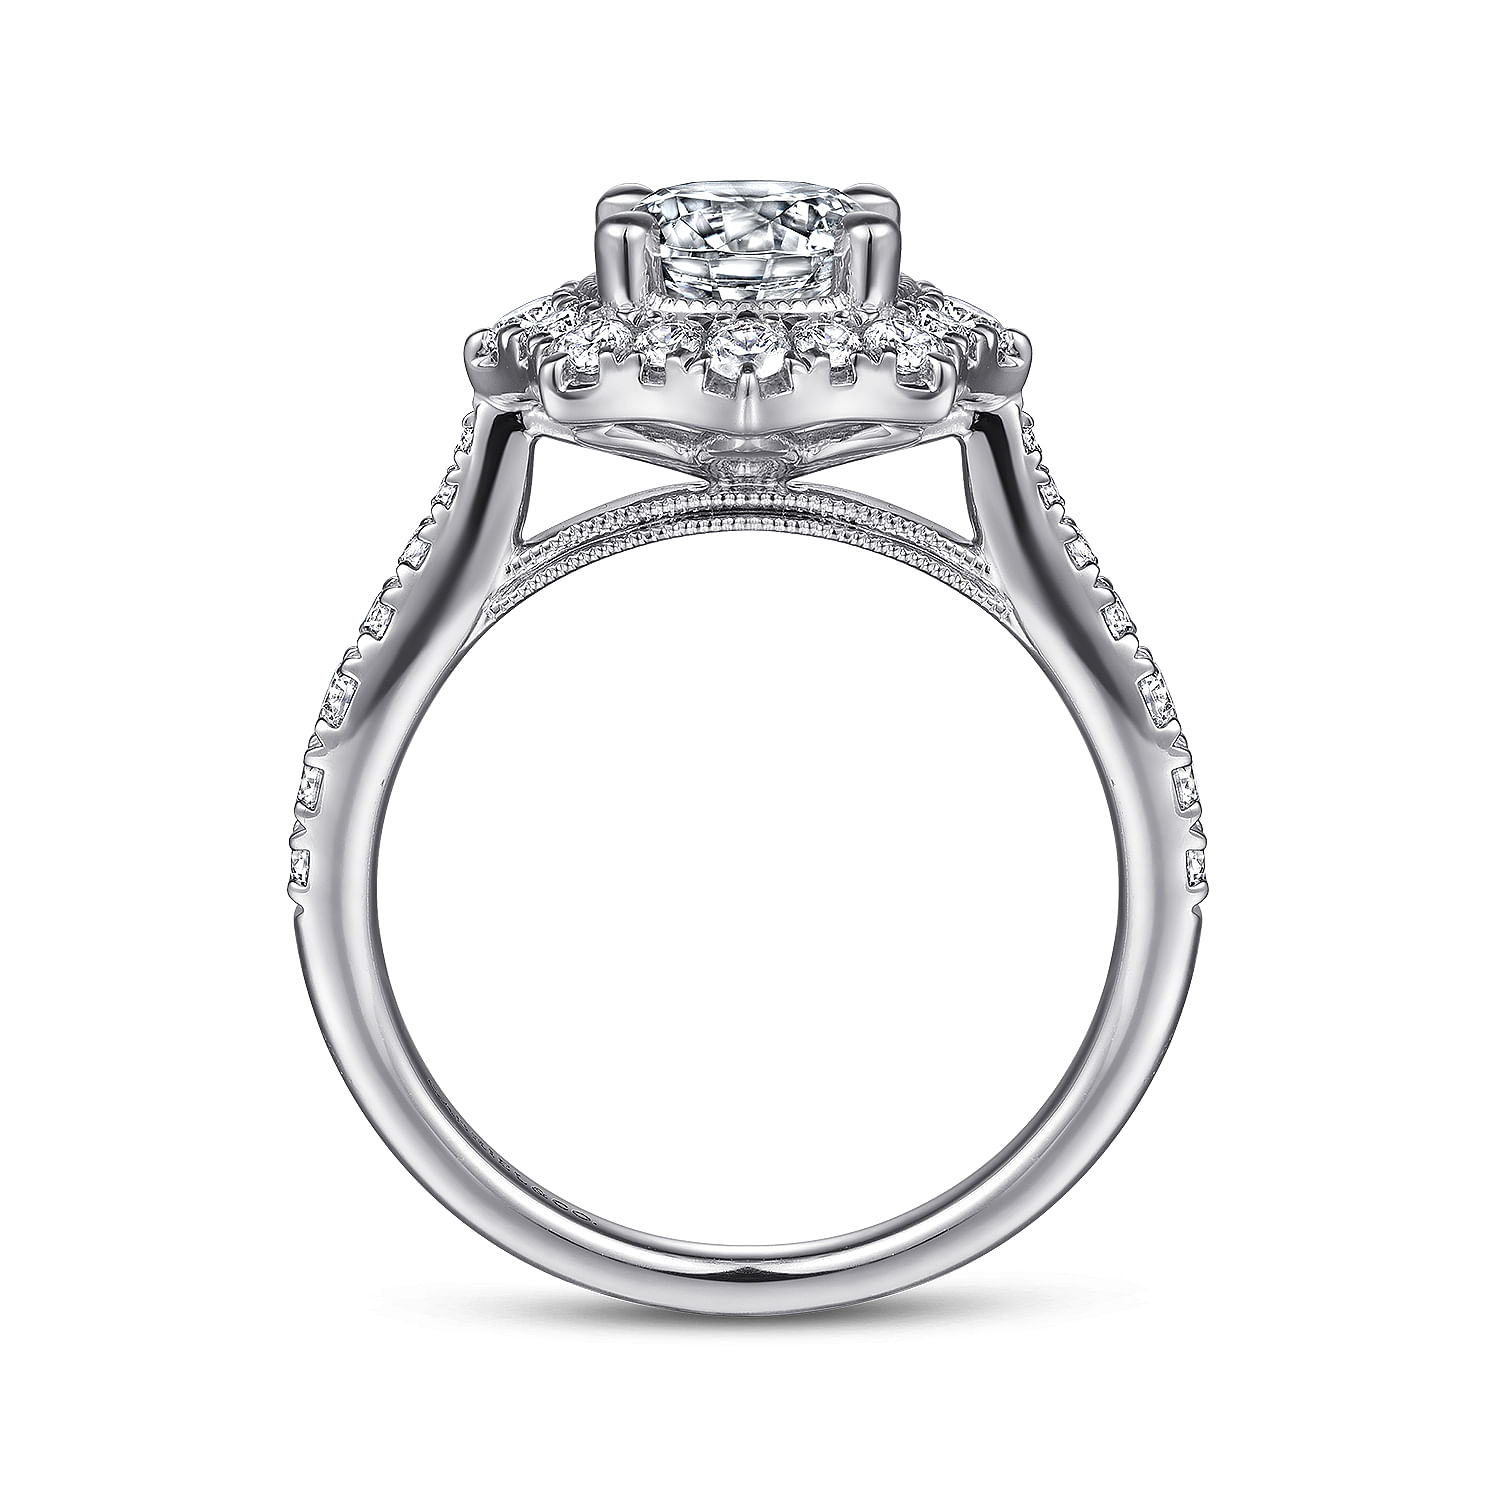 Vintage Inspired 14K White Gold Fancy Halo Round Diamond Engagement Ring